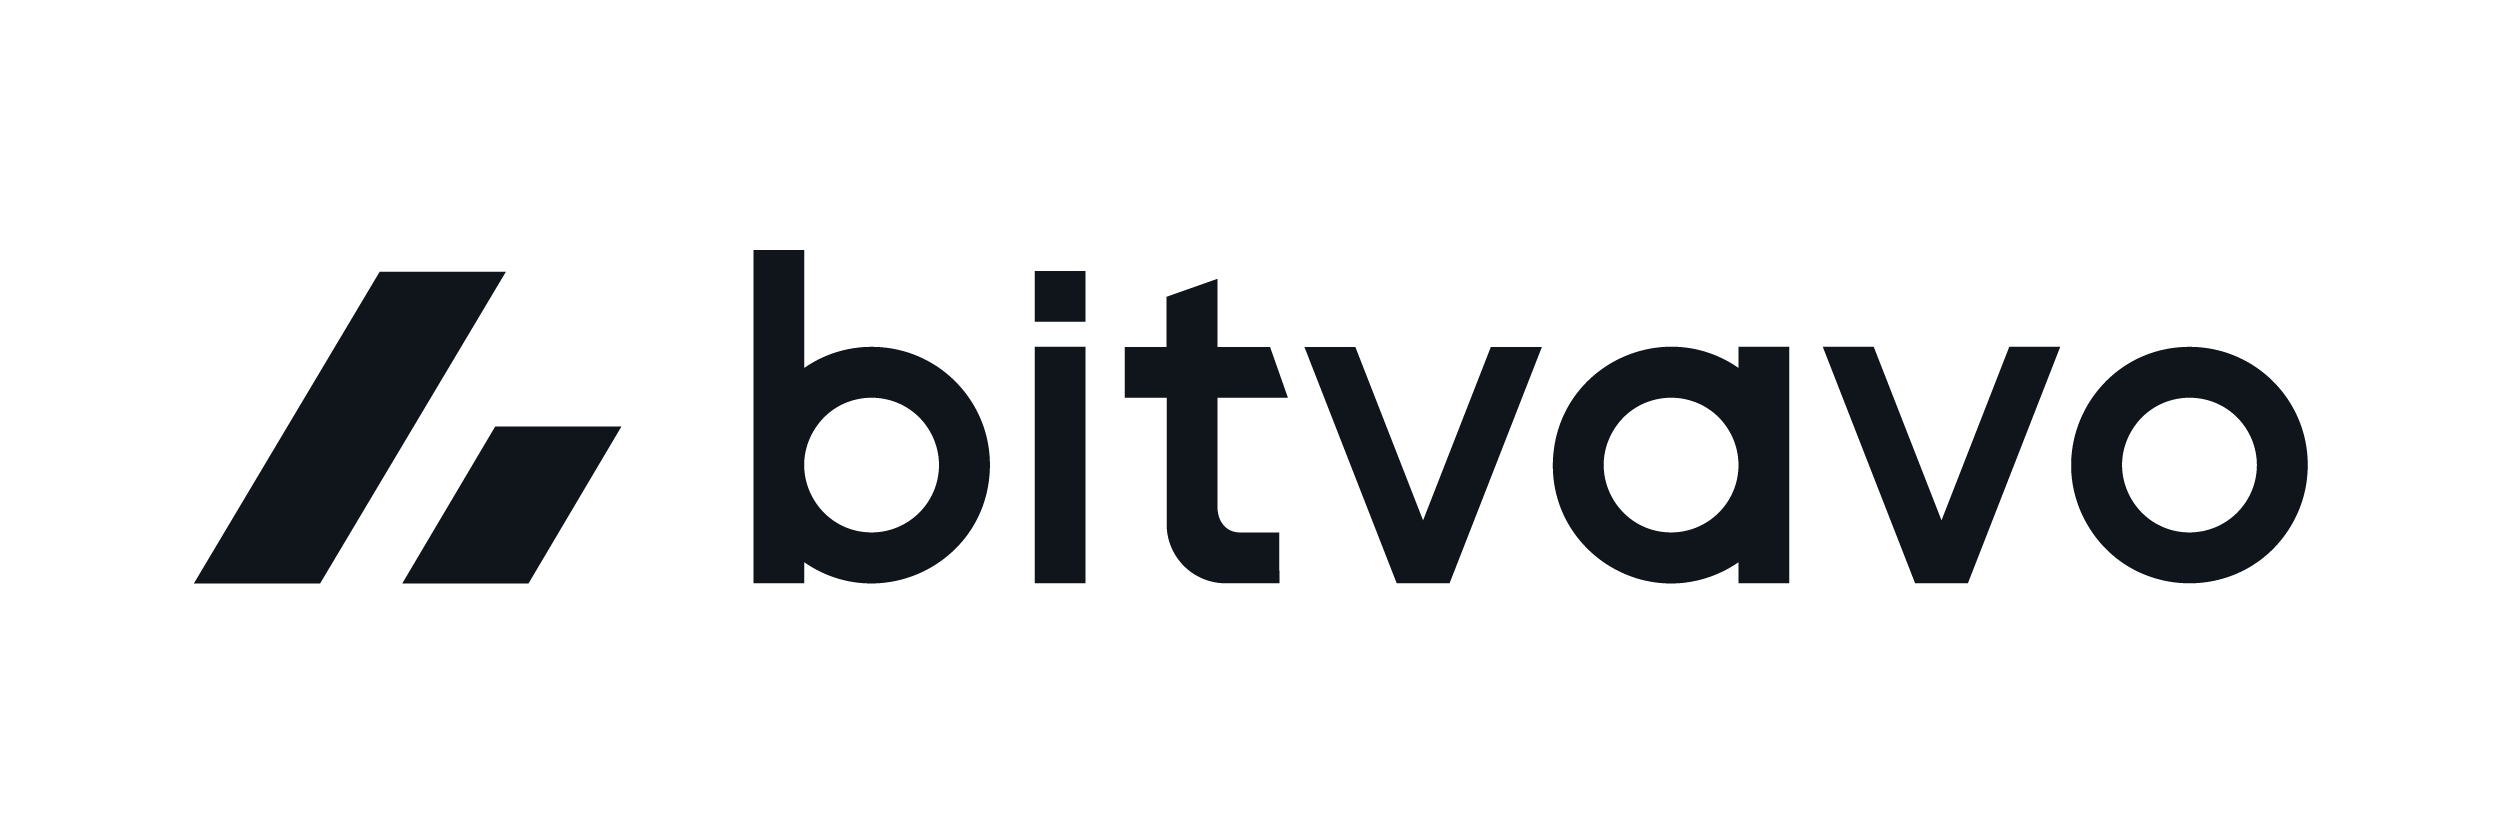 bitvavo-mark-and-logo-black